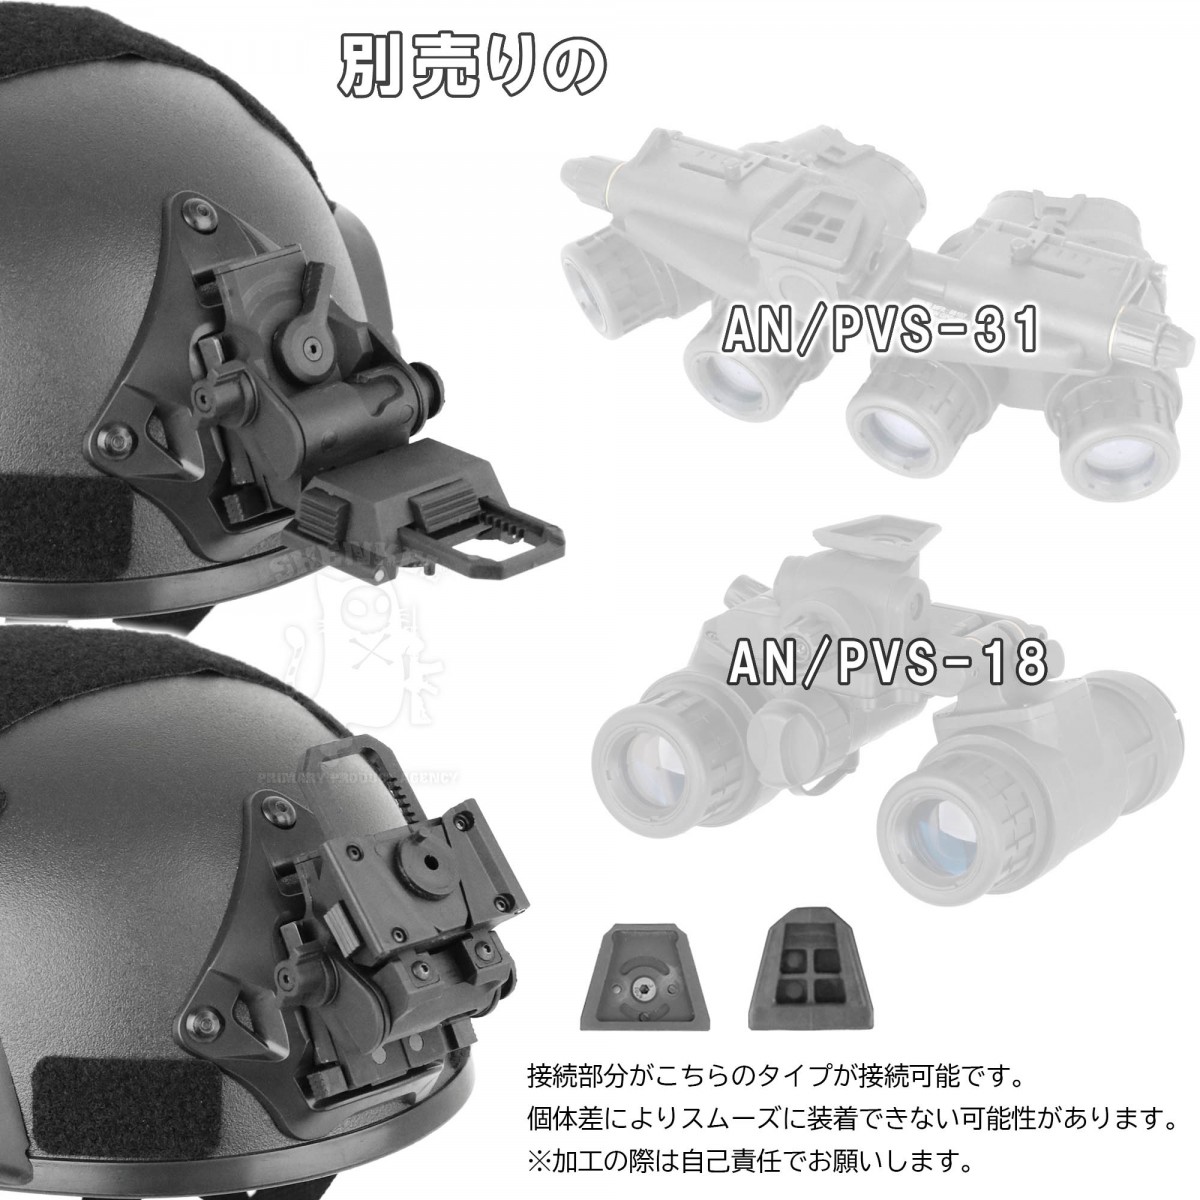 SHENKEL シェンケル 樹脂製 L4G24 NVG ナイトビジョン用 マウント ヘルメット アクセサリー レプリカ BK